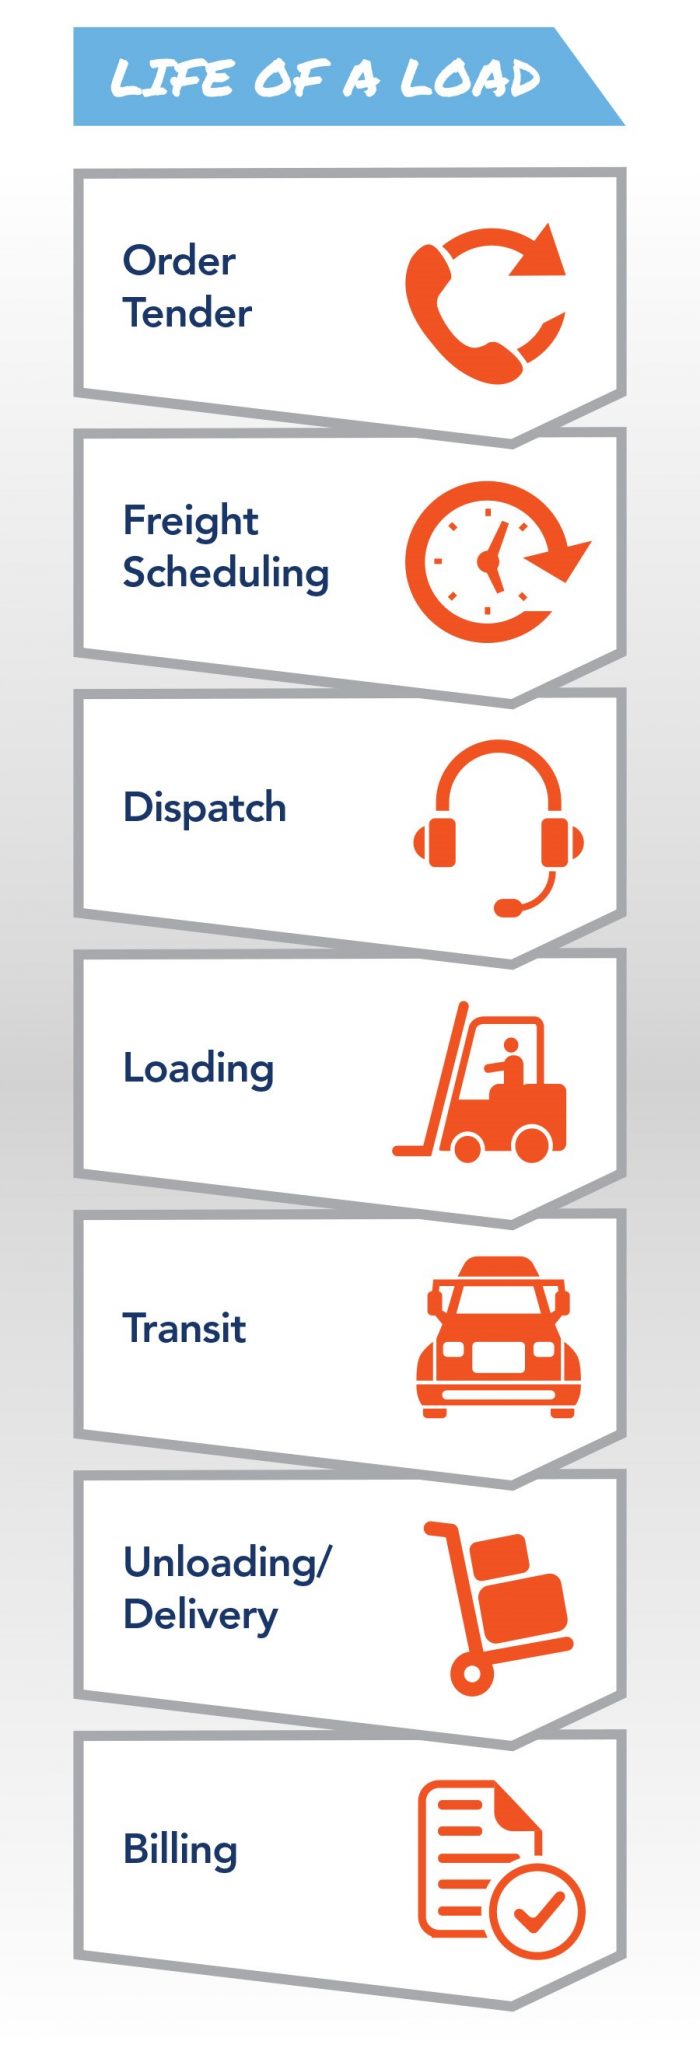 Life of a Load order tender, freight scheduling, dispatch, loading, transit, unloading delivery, billing, transportation broker